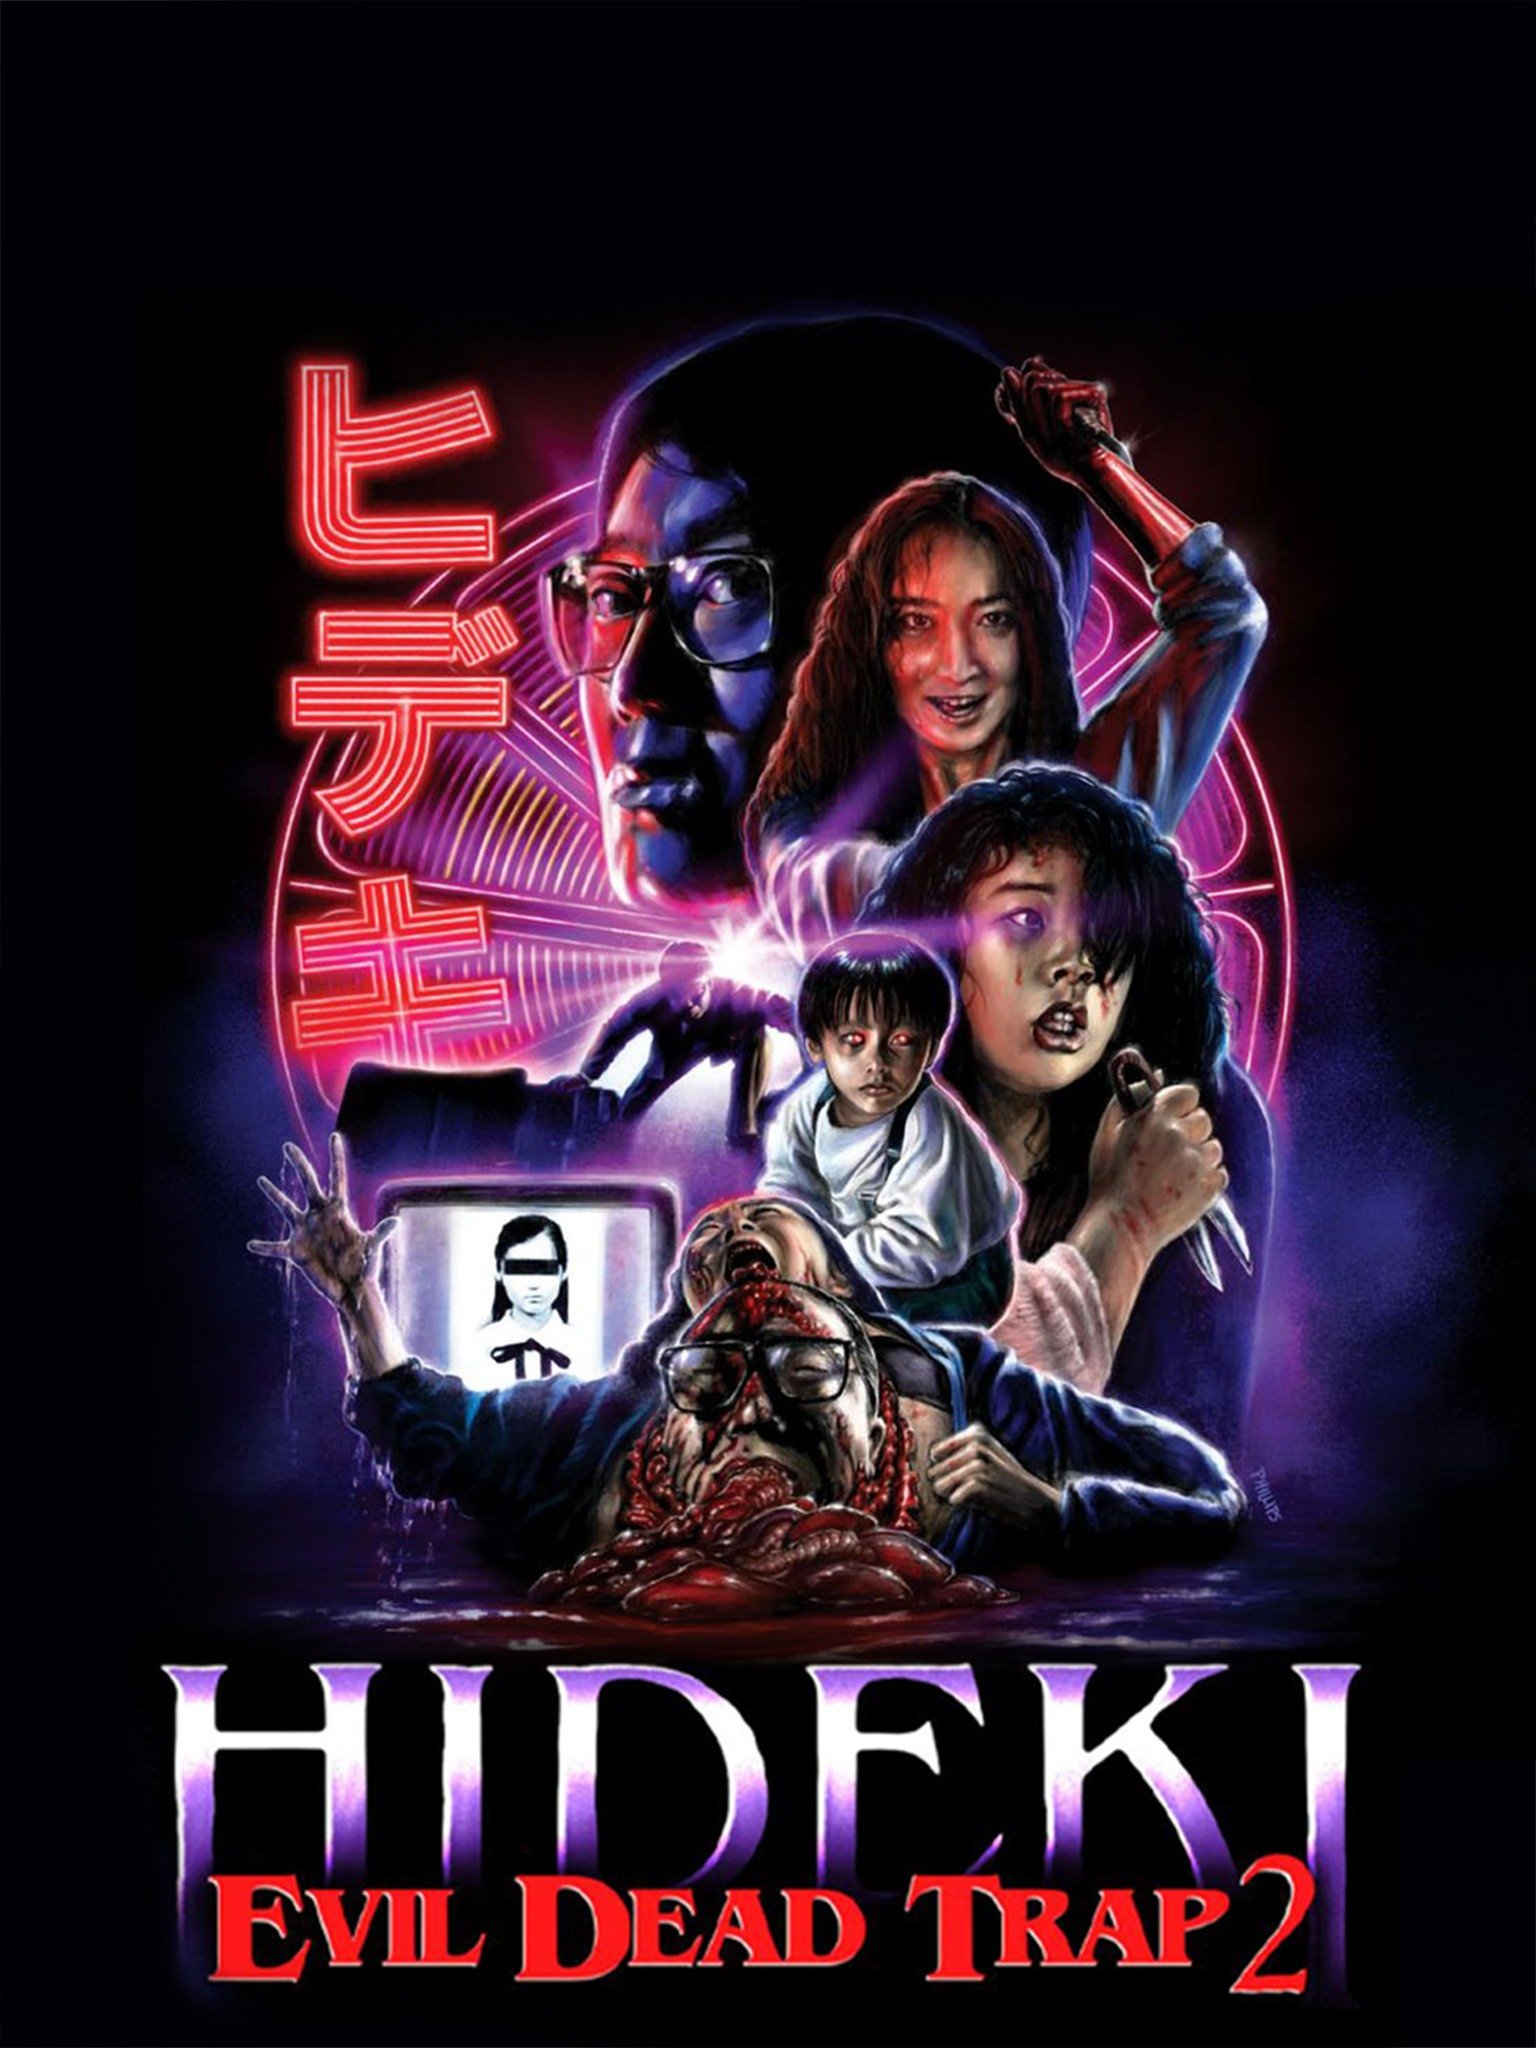 Where to watch Evil Dead Trap 2 Hideki